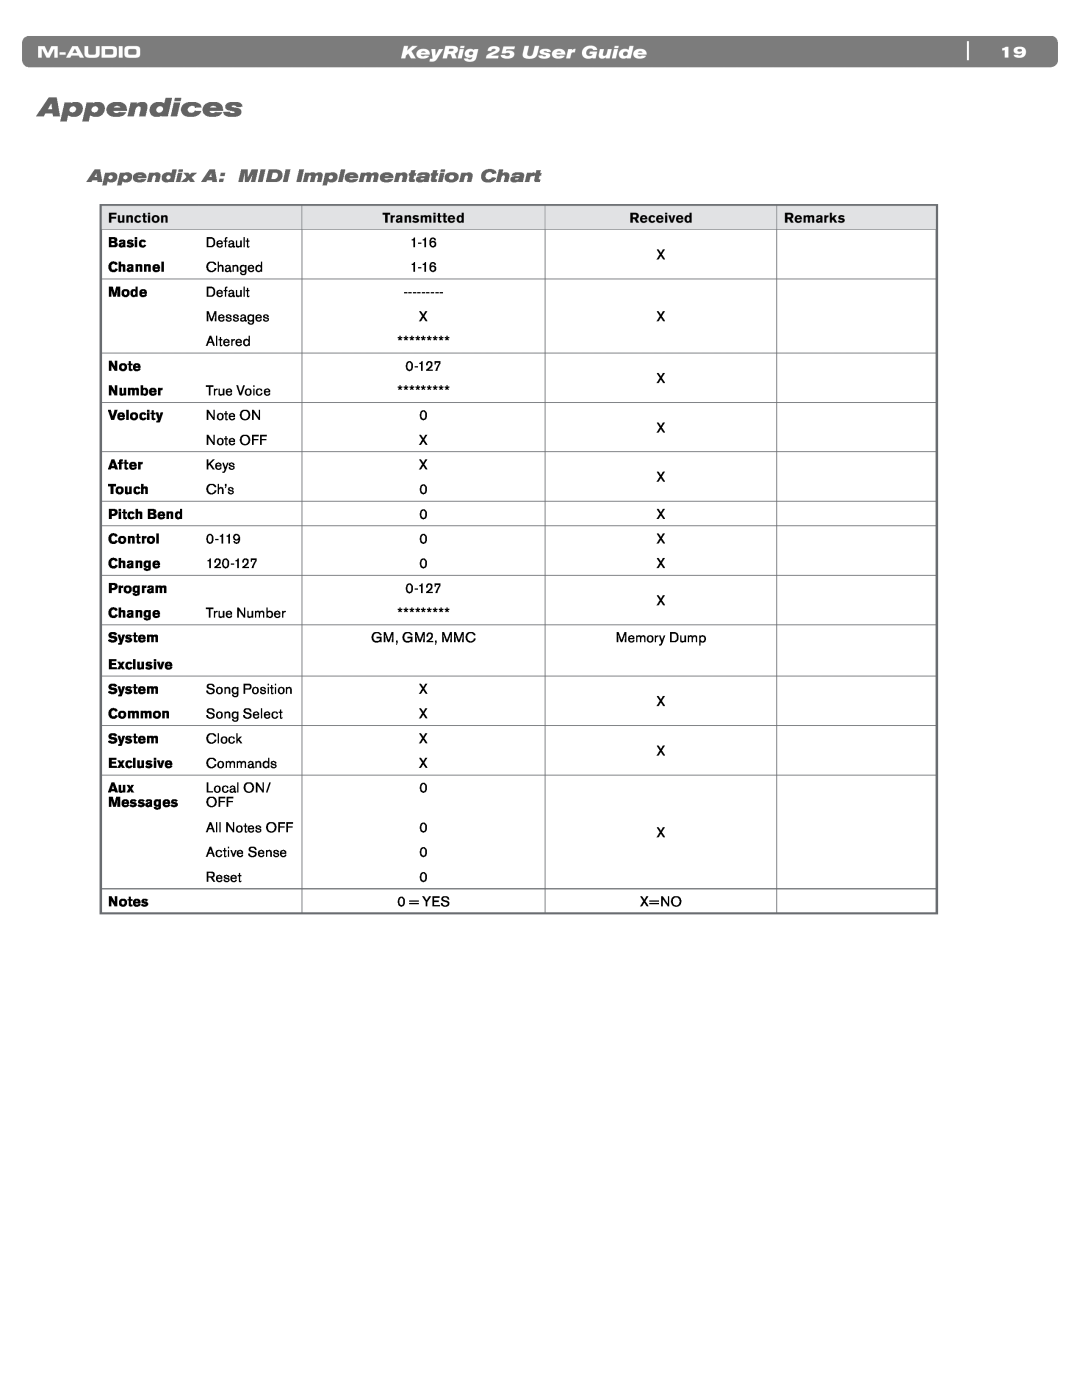 M-Audio manual Appendices, Appendix A MIDI Implementation Chart, KeyRig 25 User Guide 